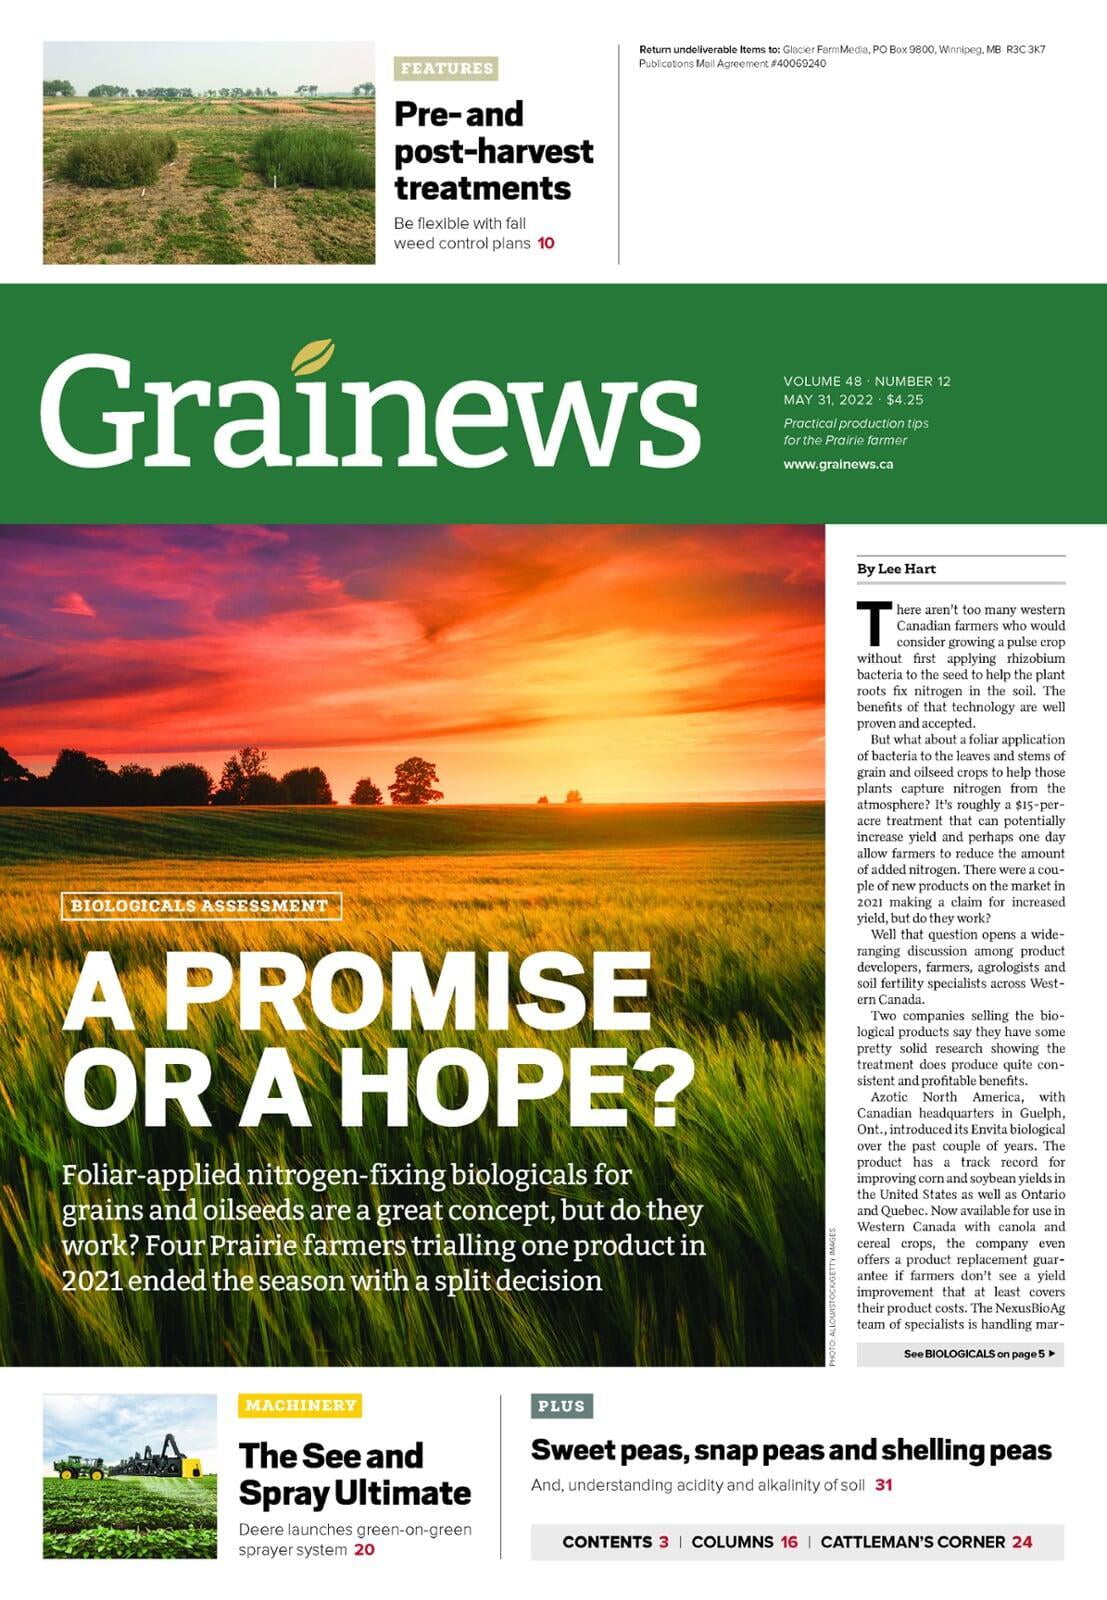 A Promise or a Hope? Grainews